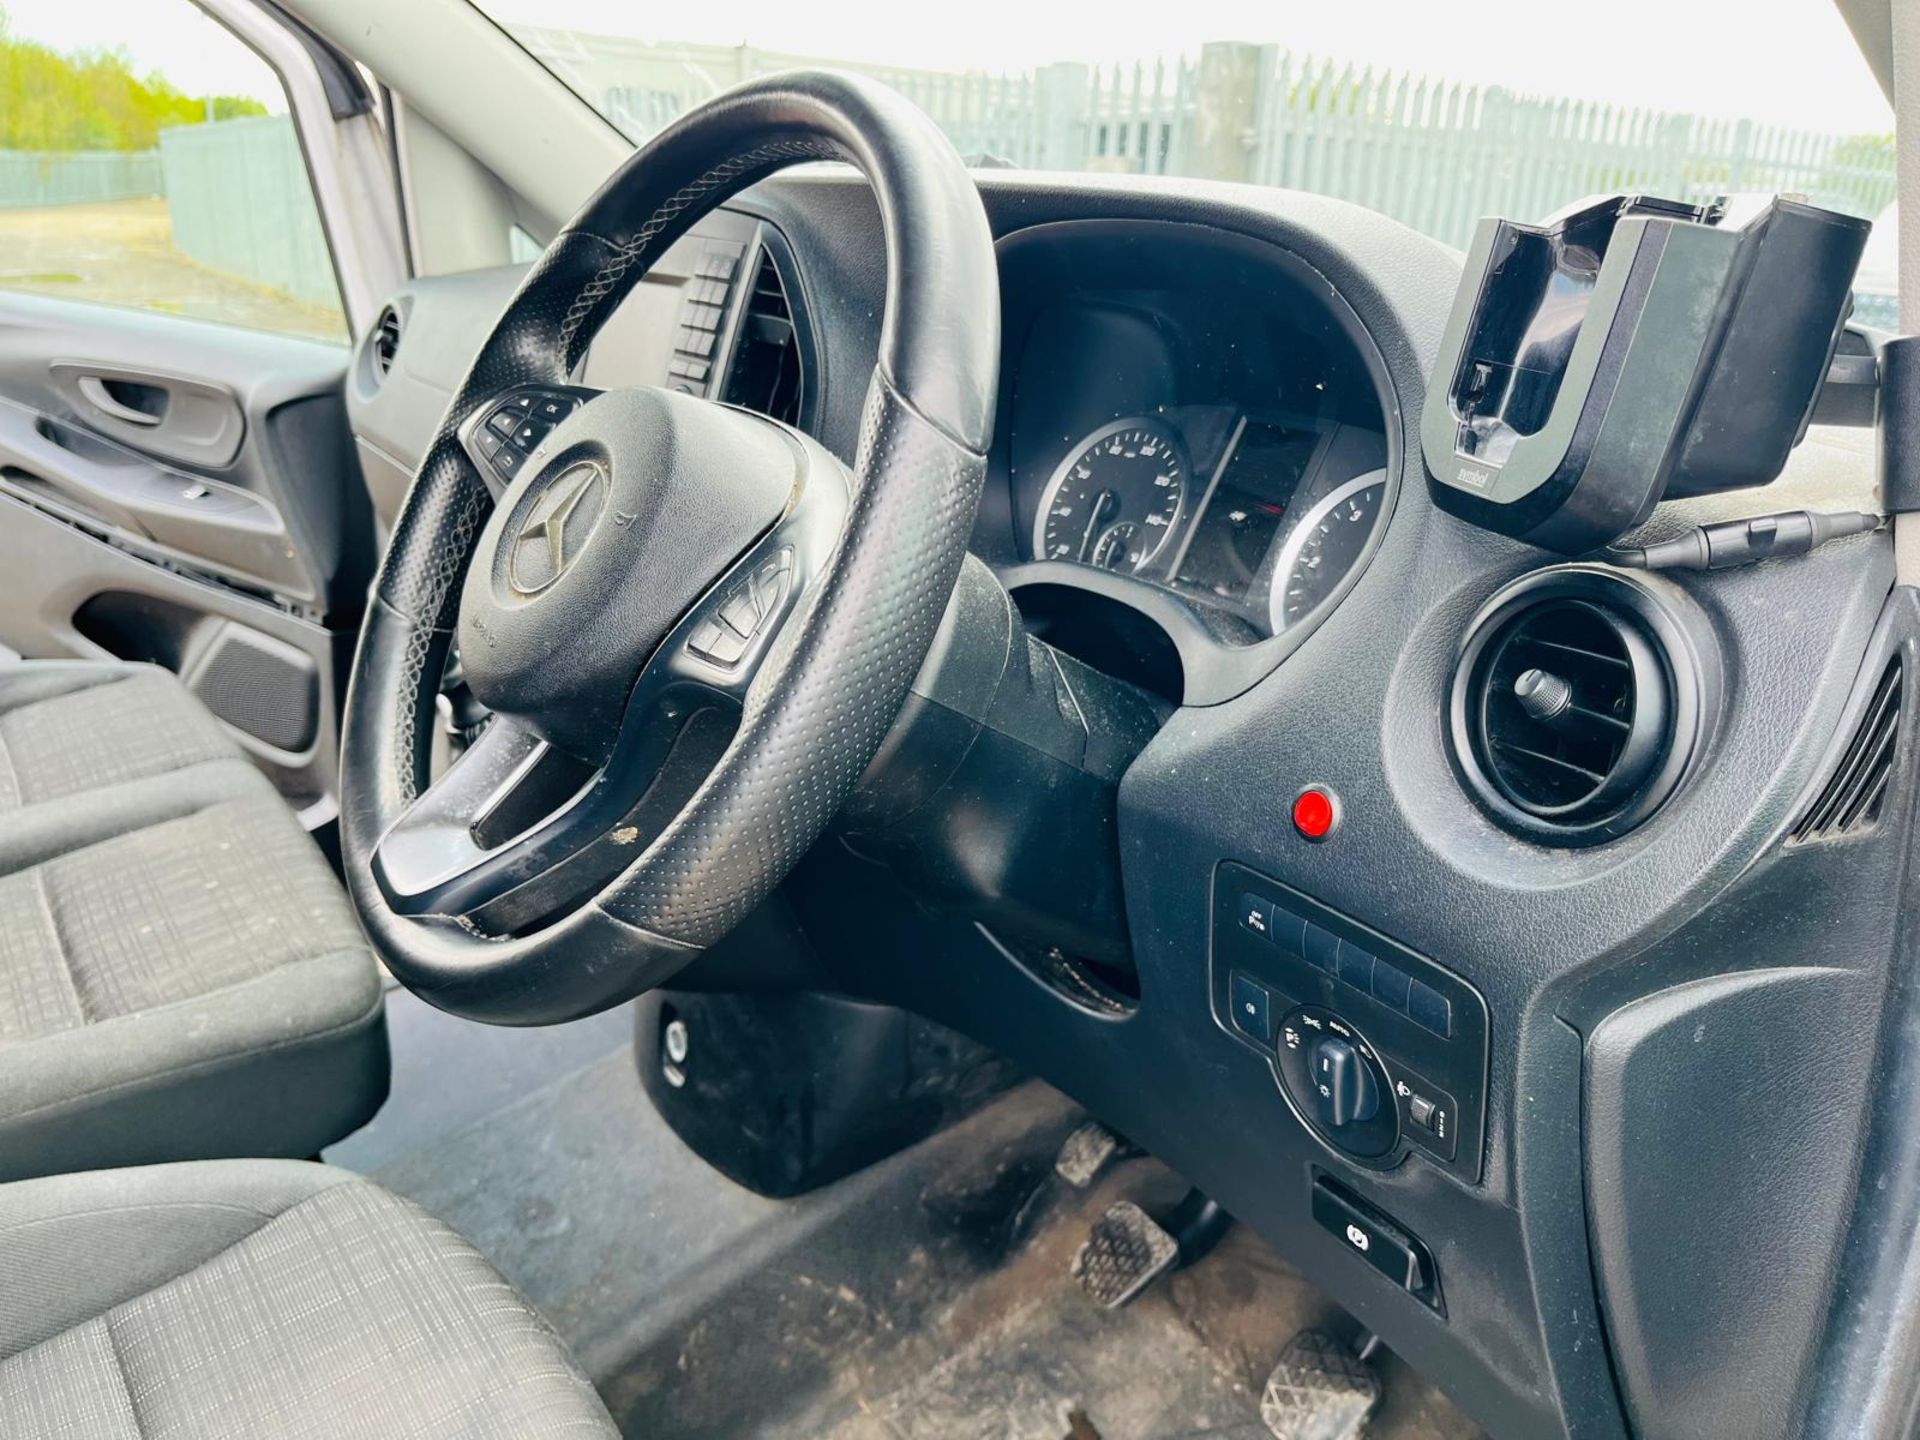 Mercedes Benz Vito 114 CDI RWD Fridge/Freezer 2.1 2019 '19 Reg '-ULEZ Compliant-Parking Sensors-A/C - Image 18 of 27